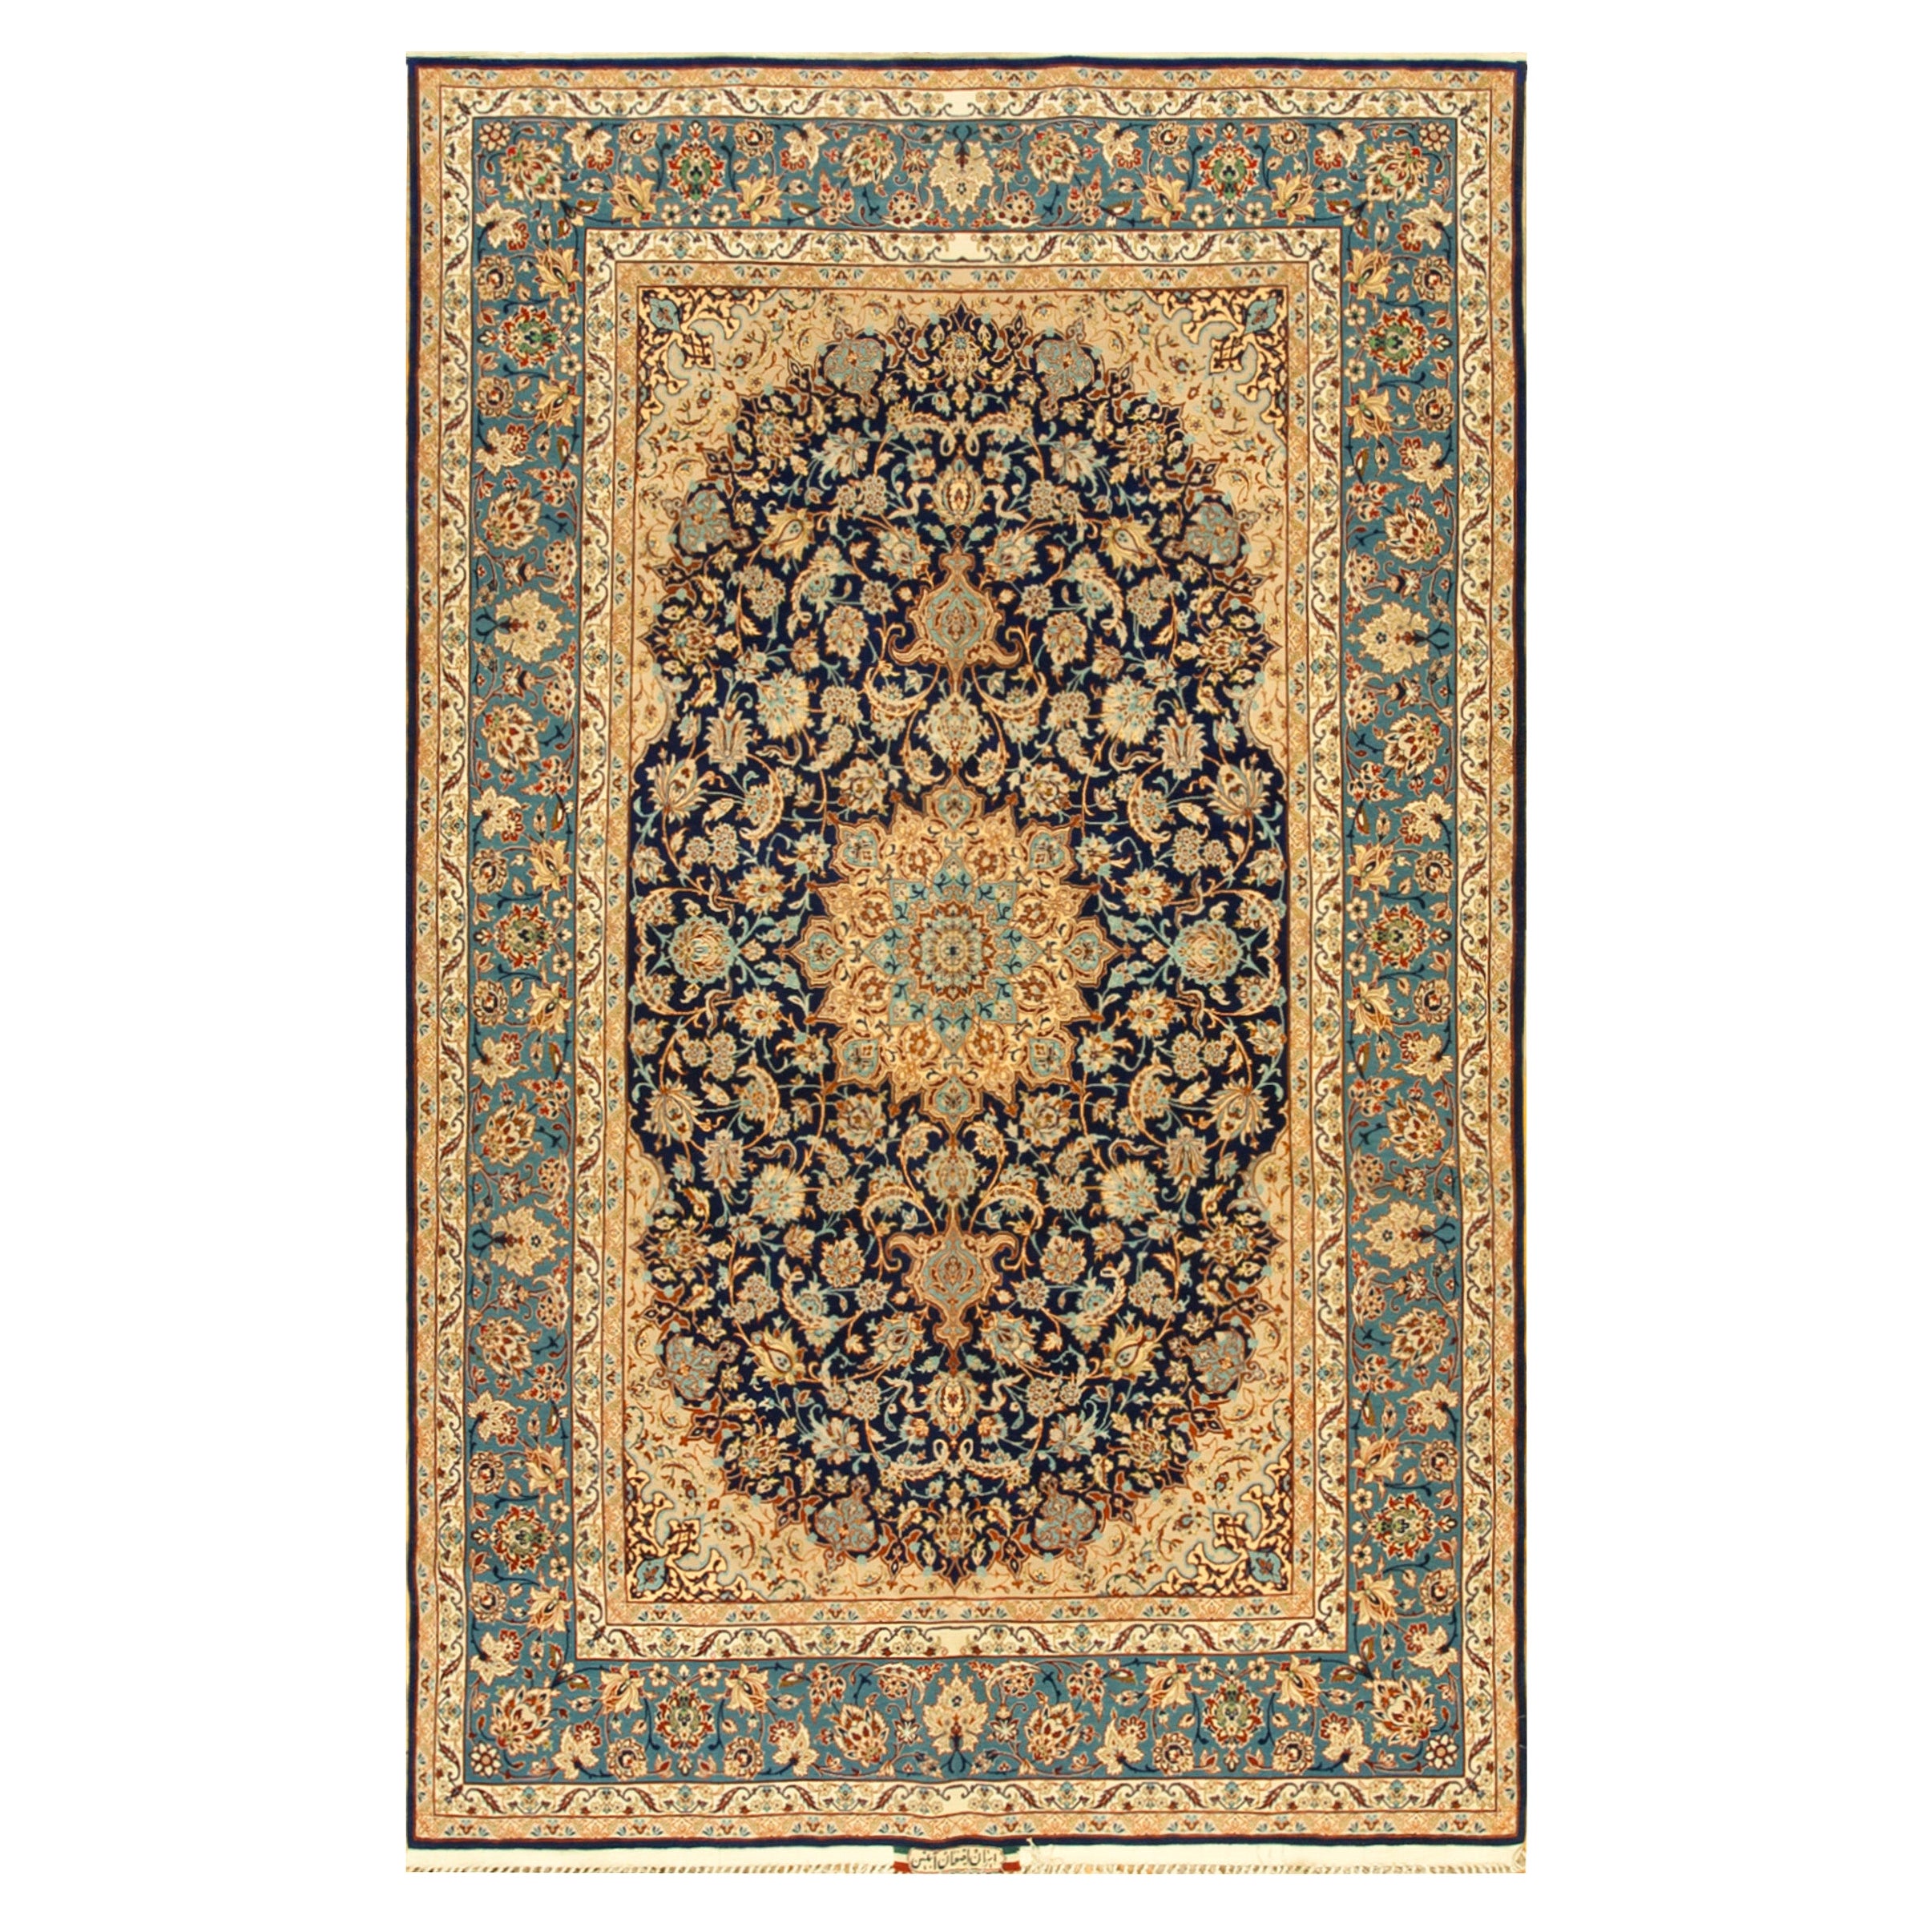 Mid 20th Century Persian Isfahan Carpet Signed Abtin (4'10" x 7 10" - 147 x 238)